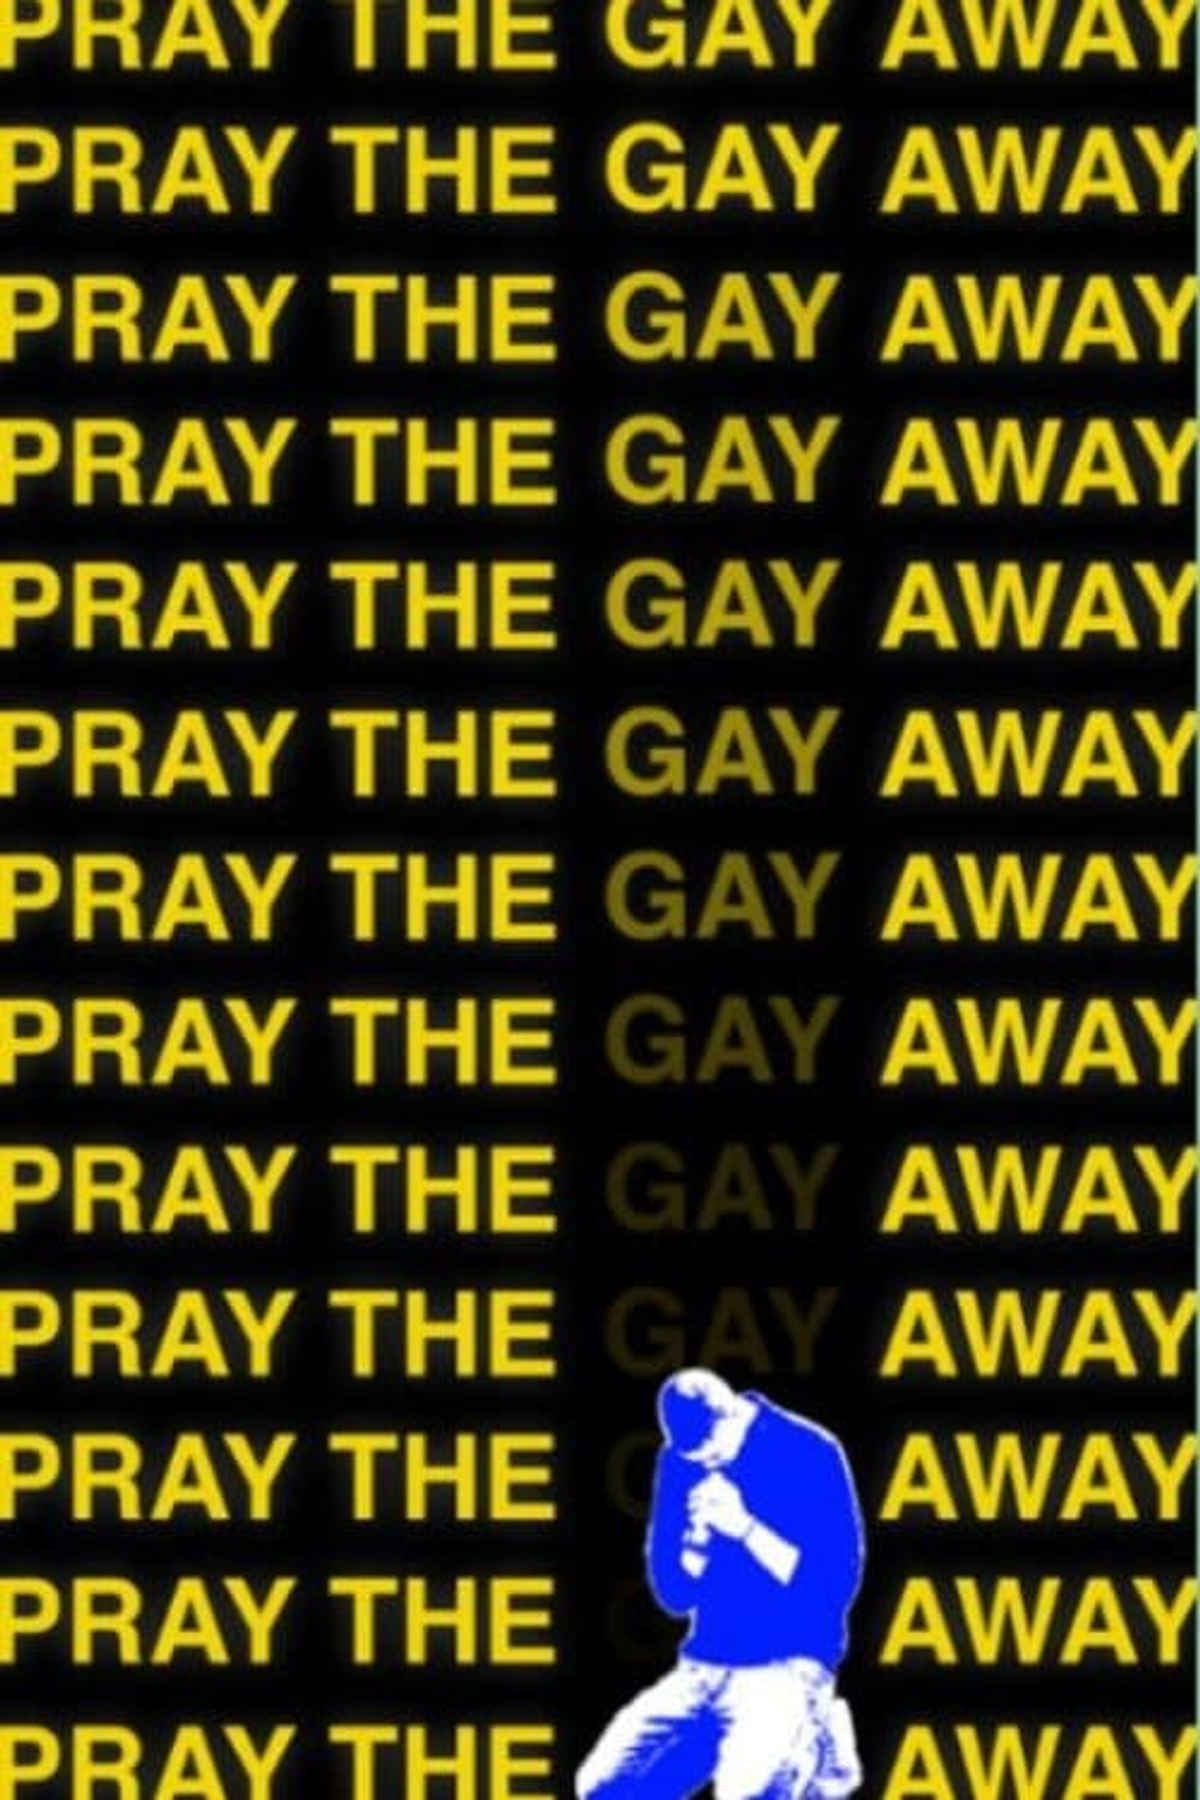 Pray the Gay Away